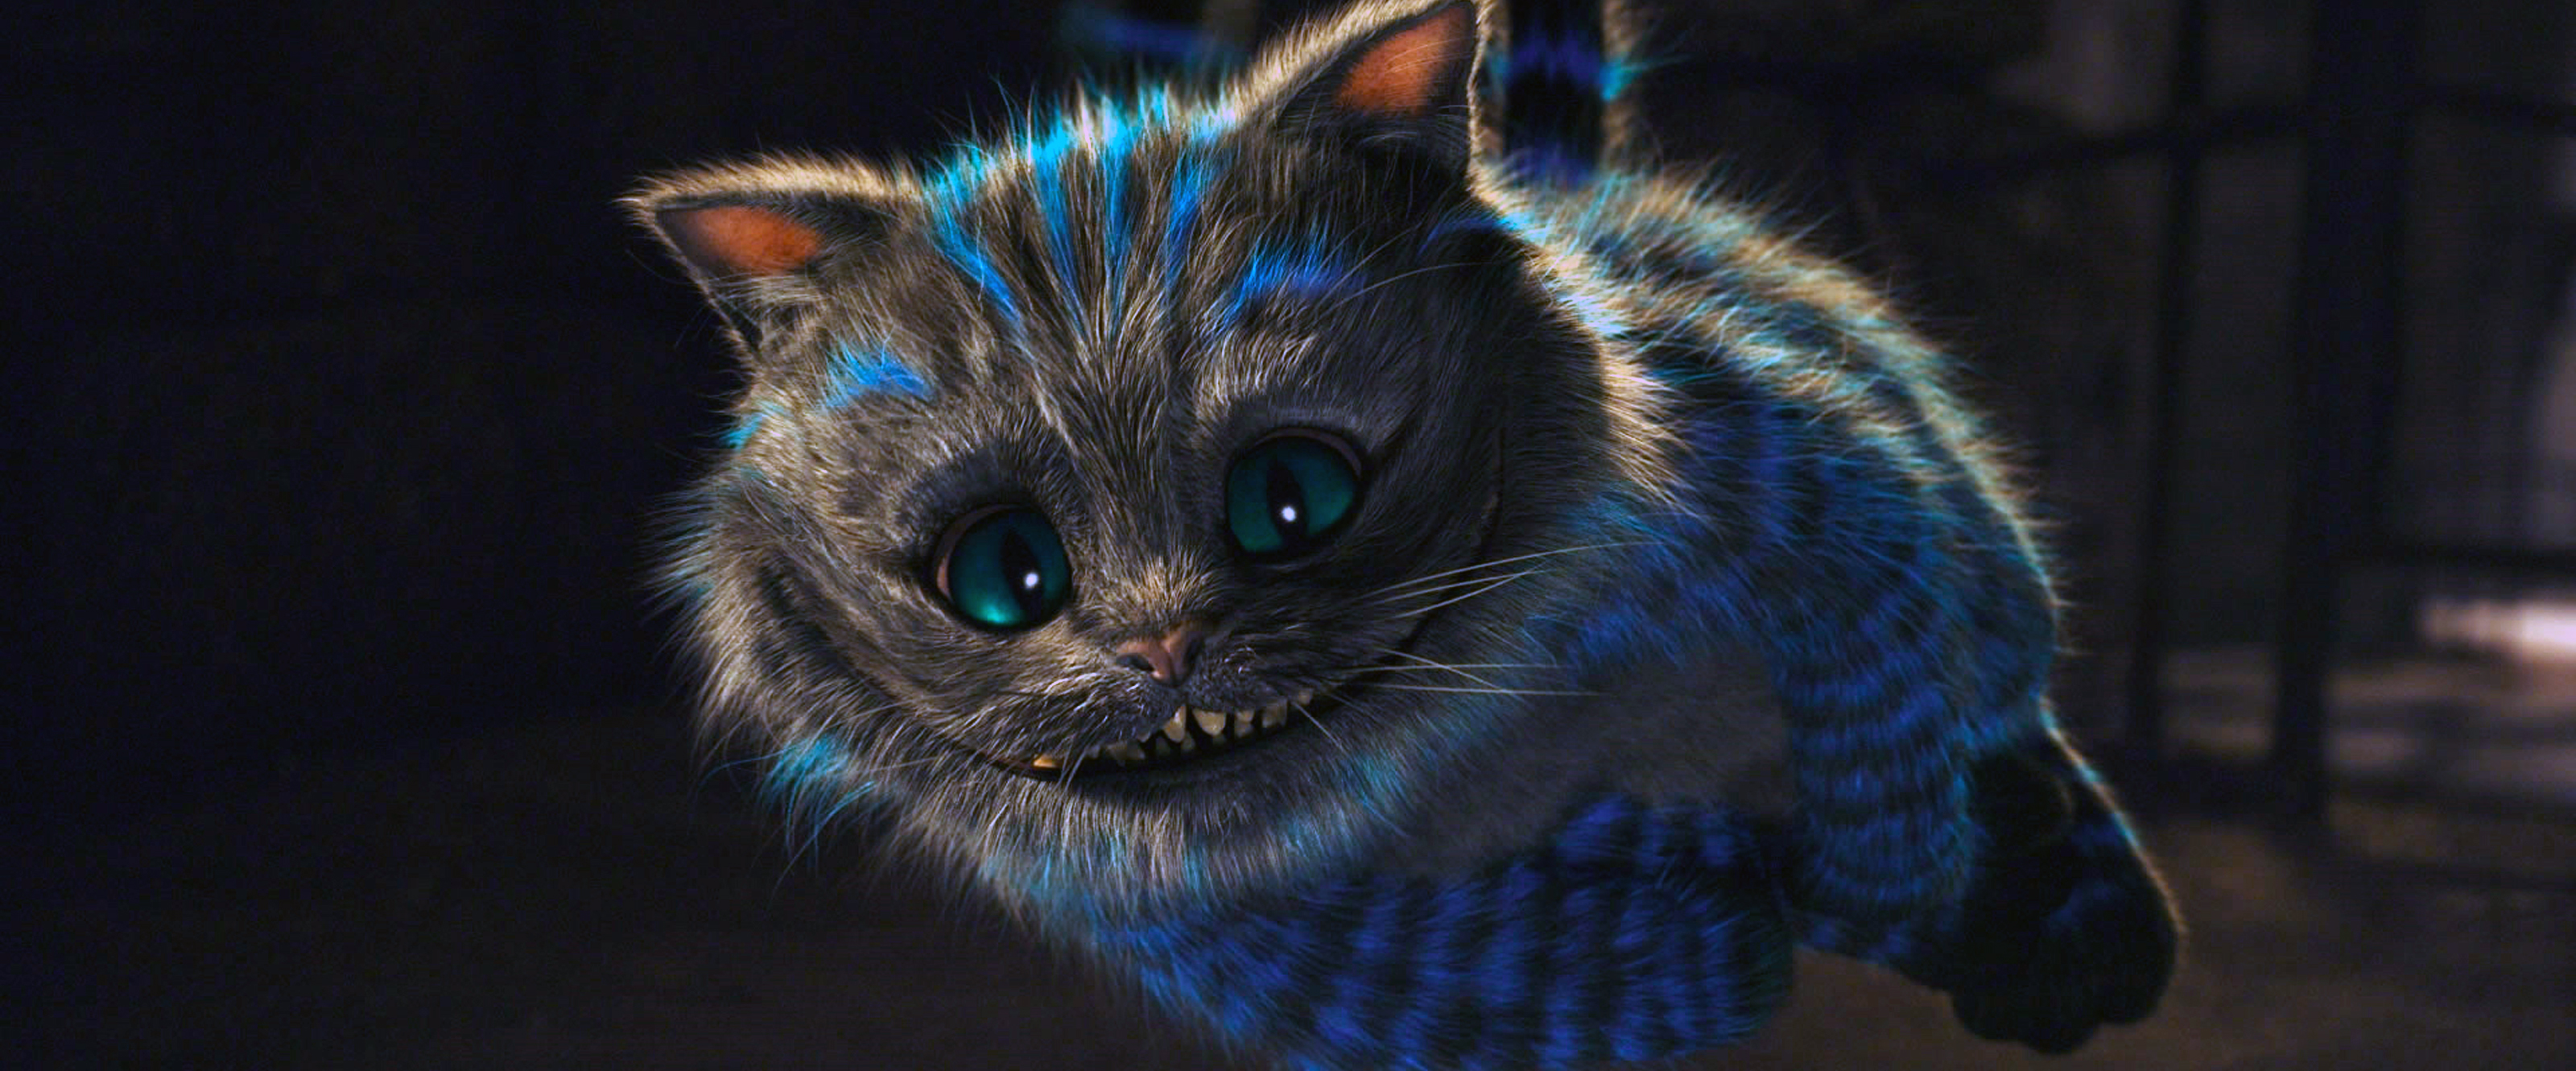 Alice in Wonderland, Tim Burton, Cheshire Cat - desktop wallpaper